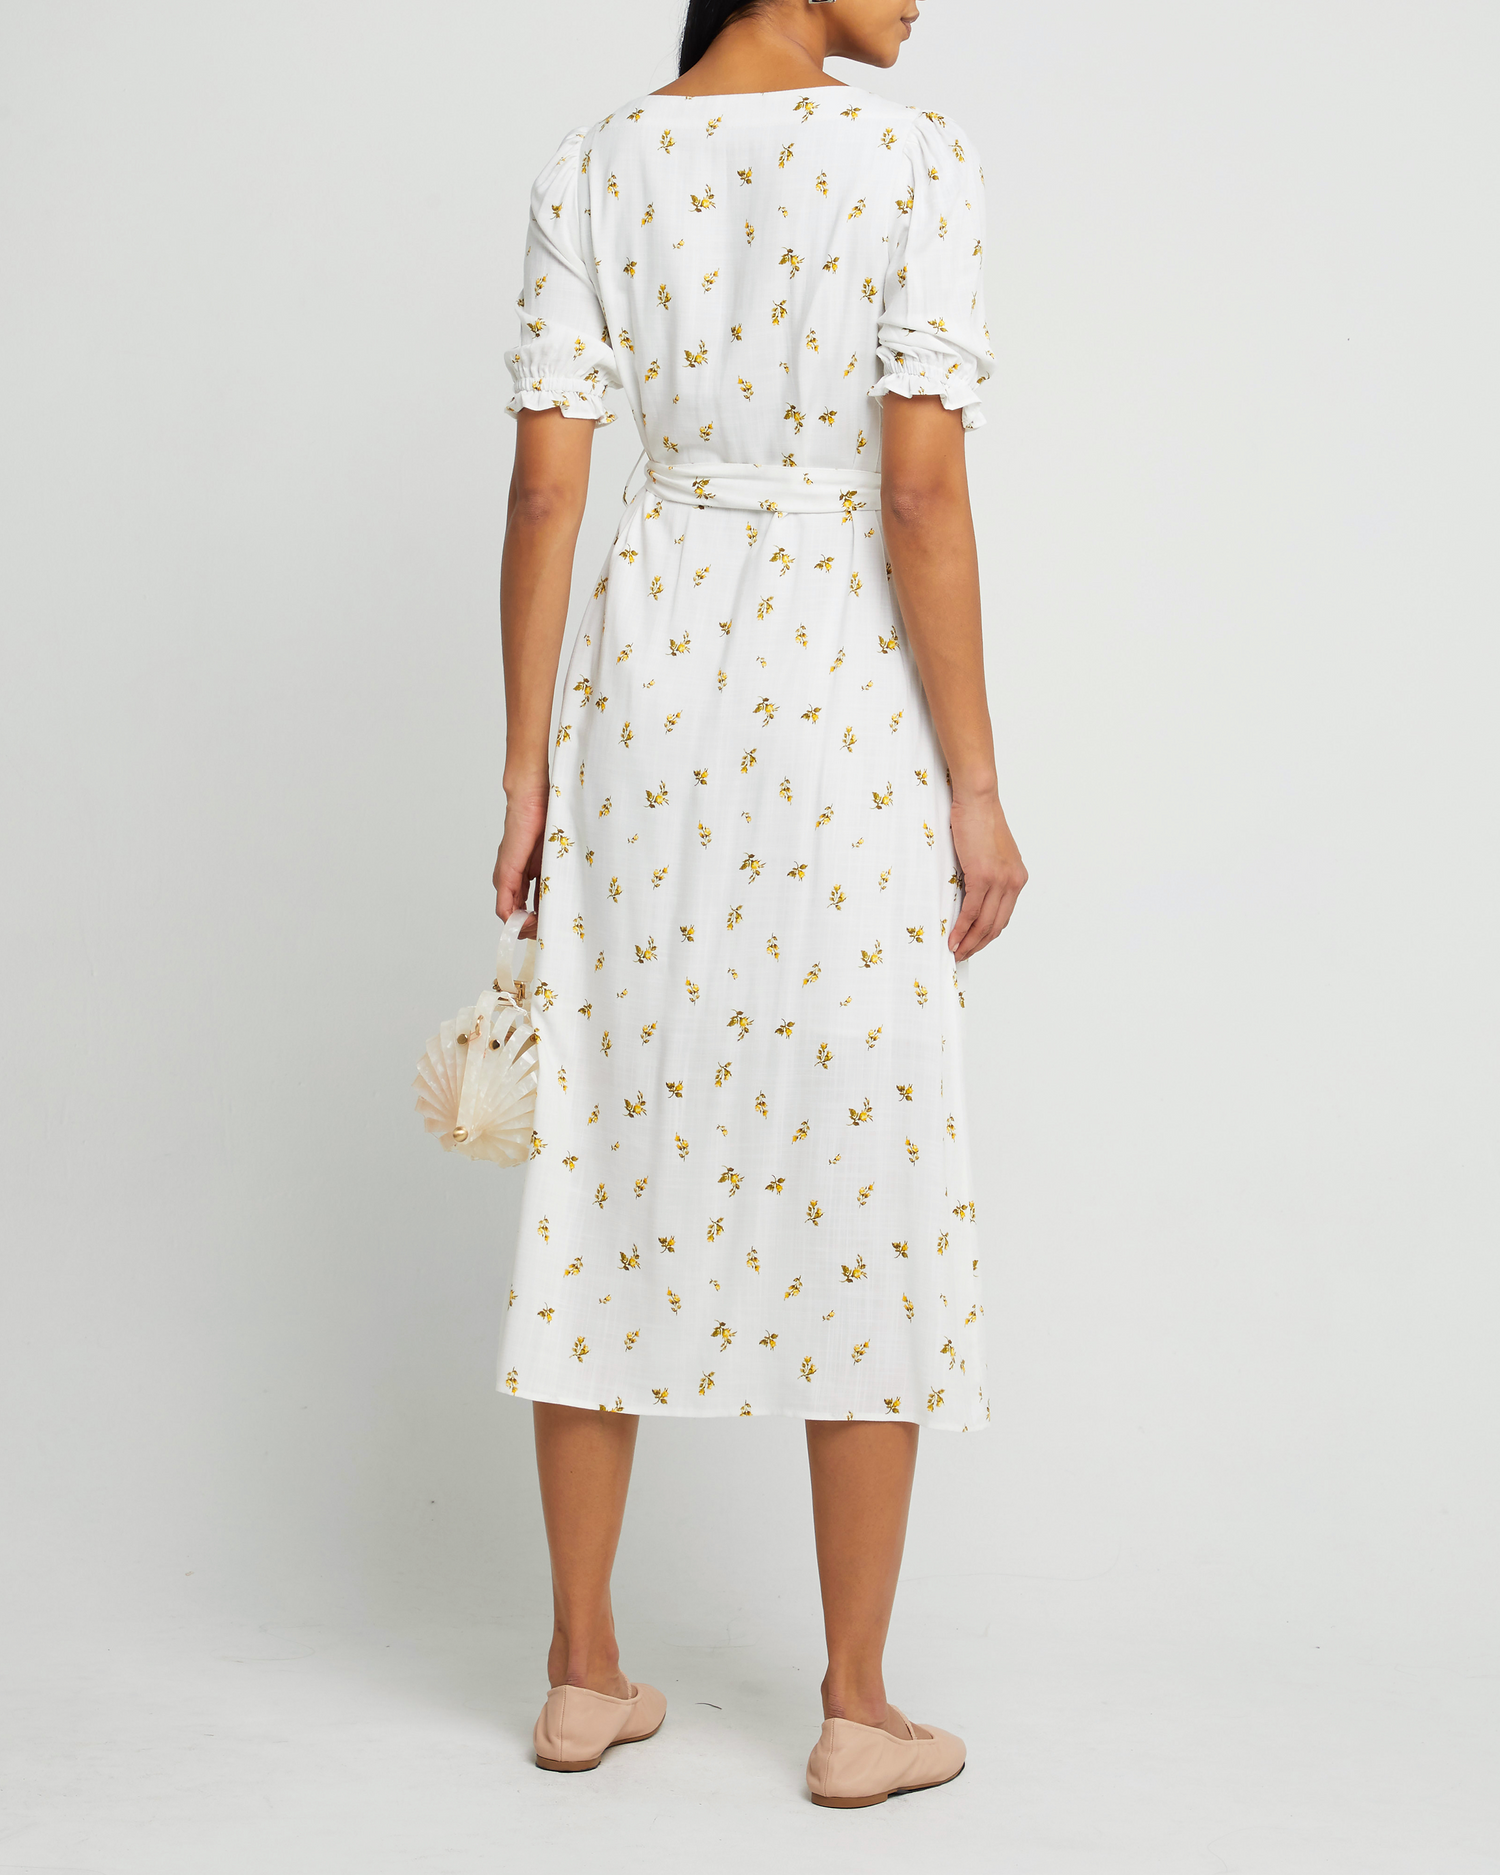 Second image of Juni Dress, a white maxi dress, short sleeve, waist tie, white print